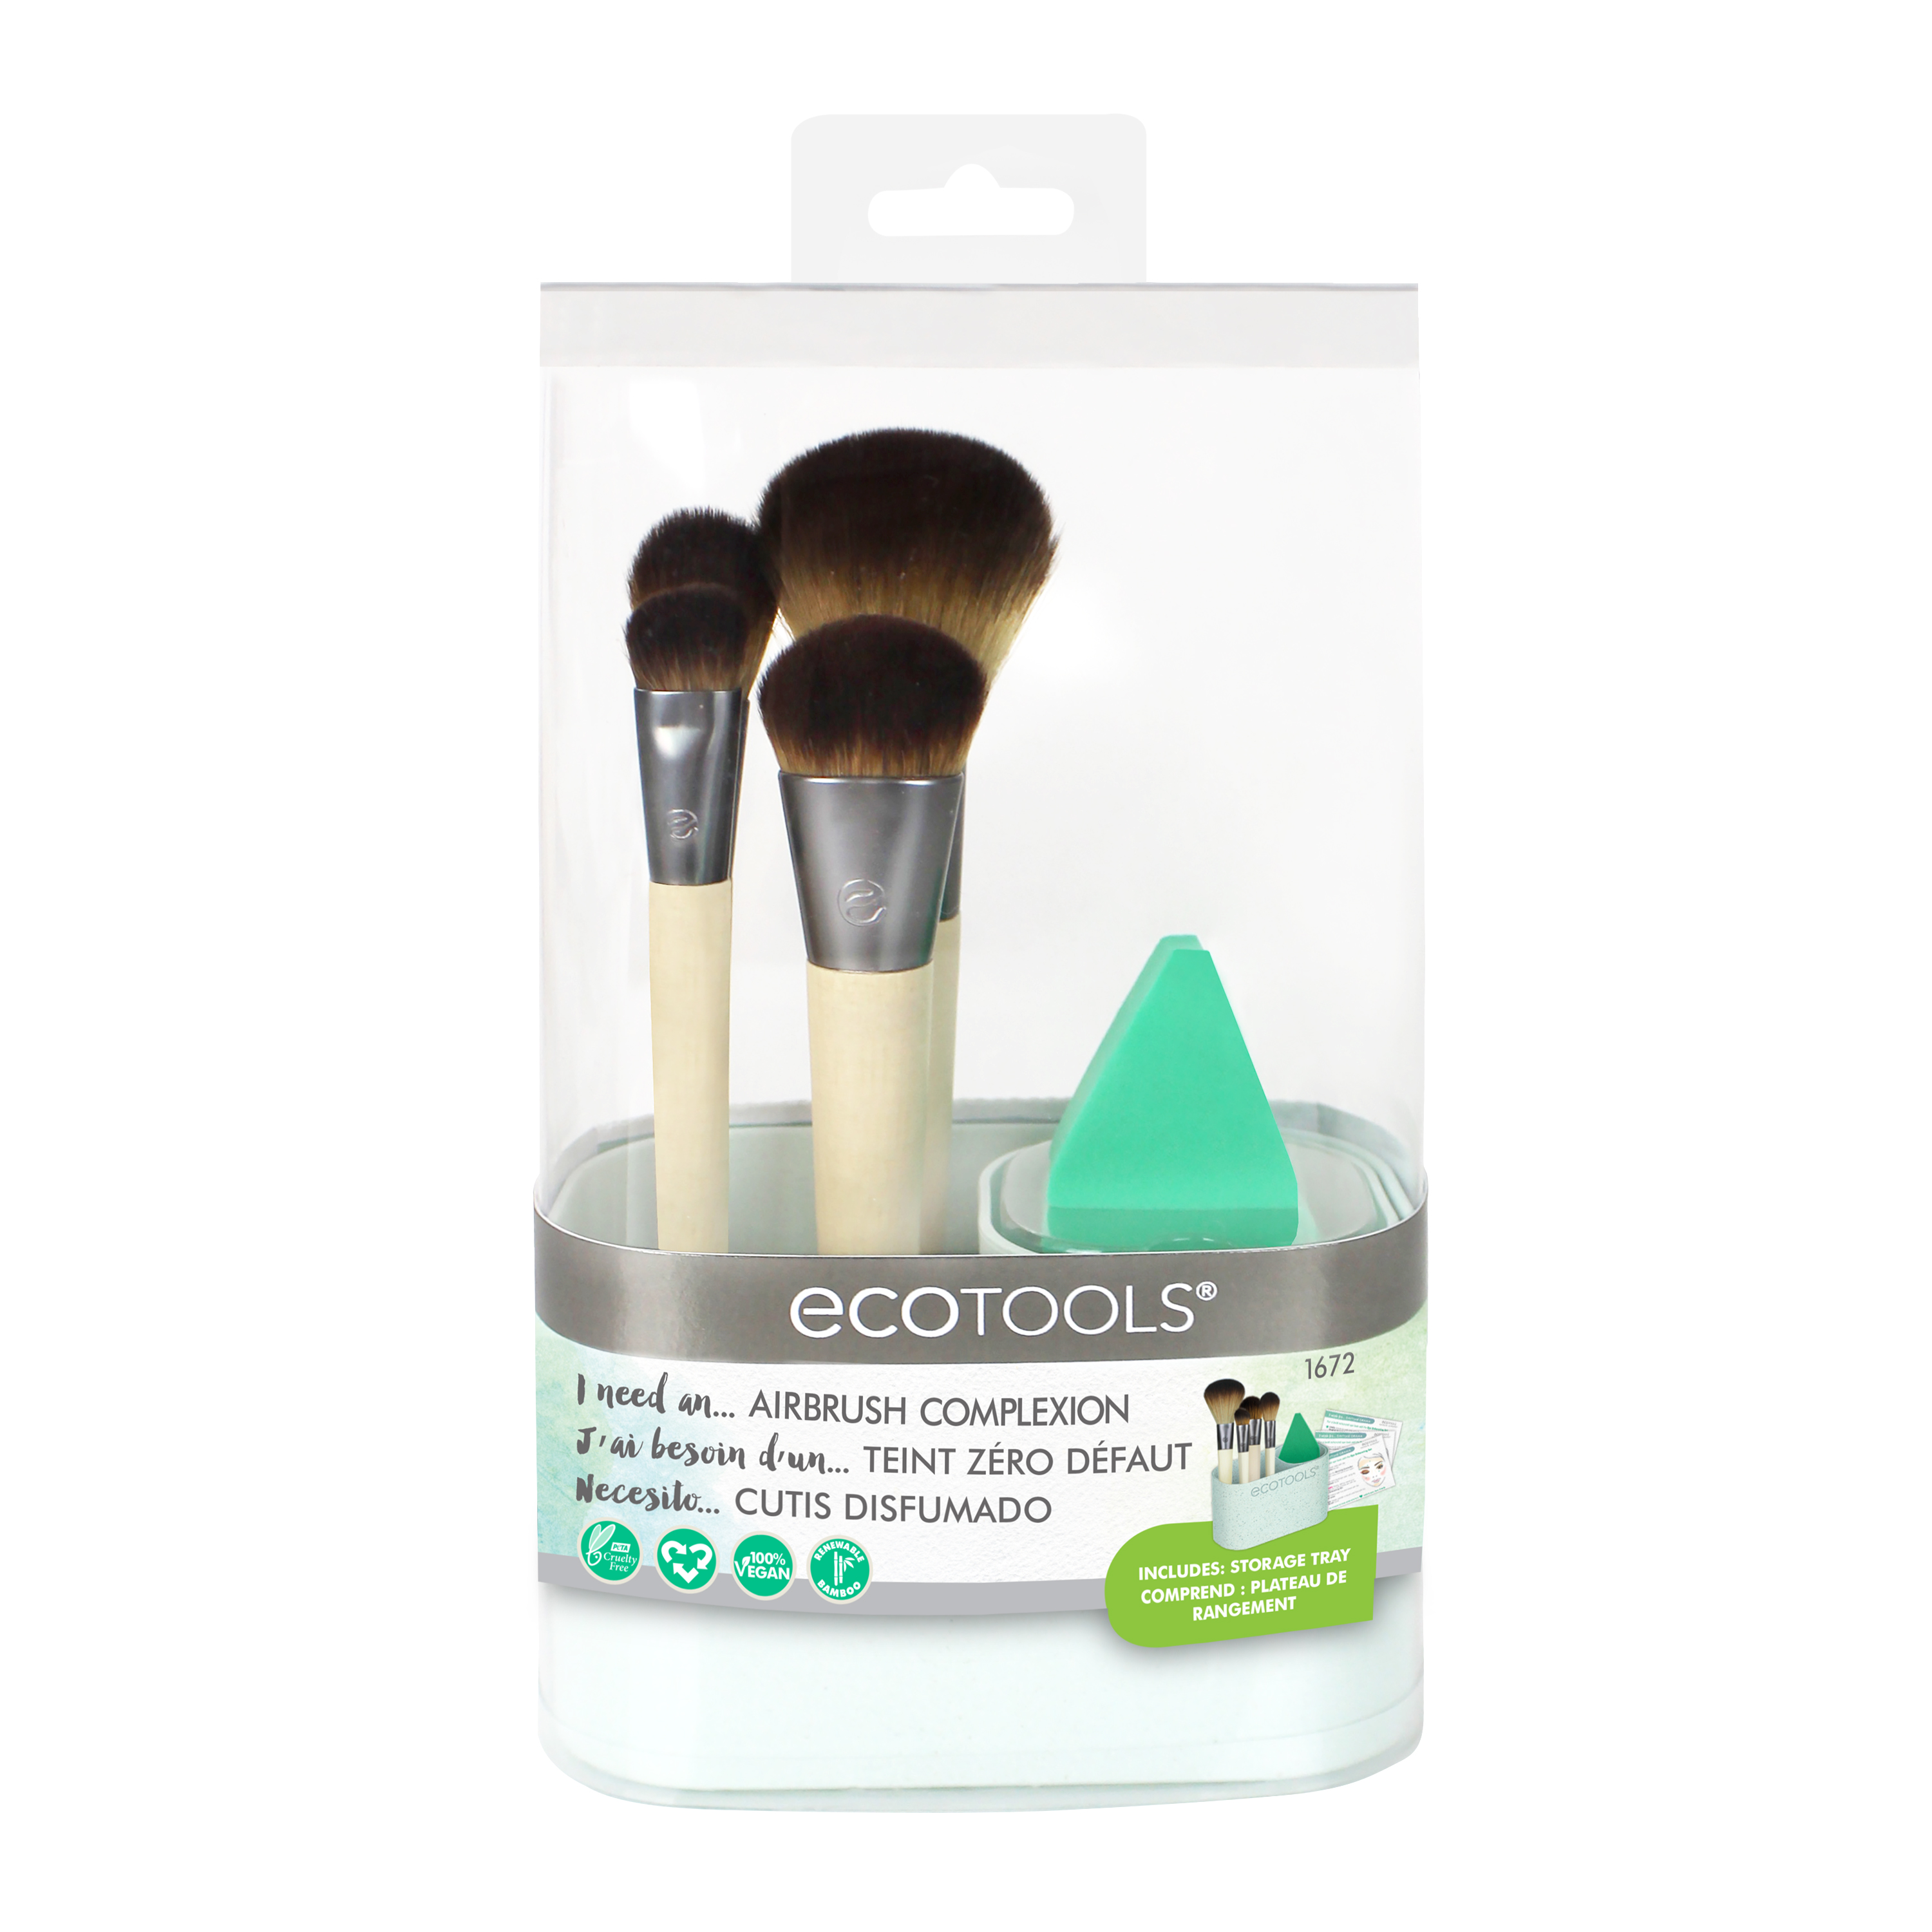 EcoTools Airbrush Complexion Kit, 1 sett